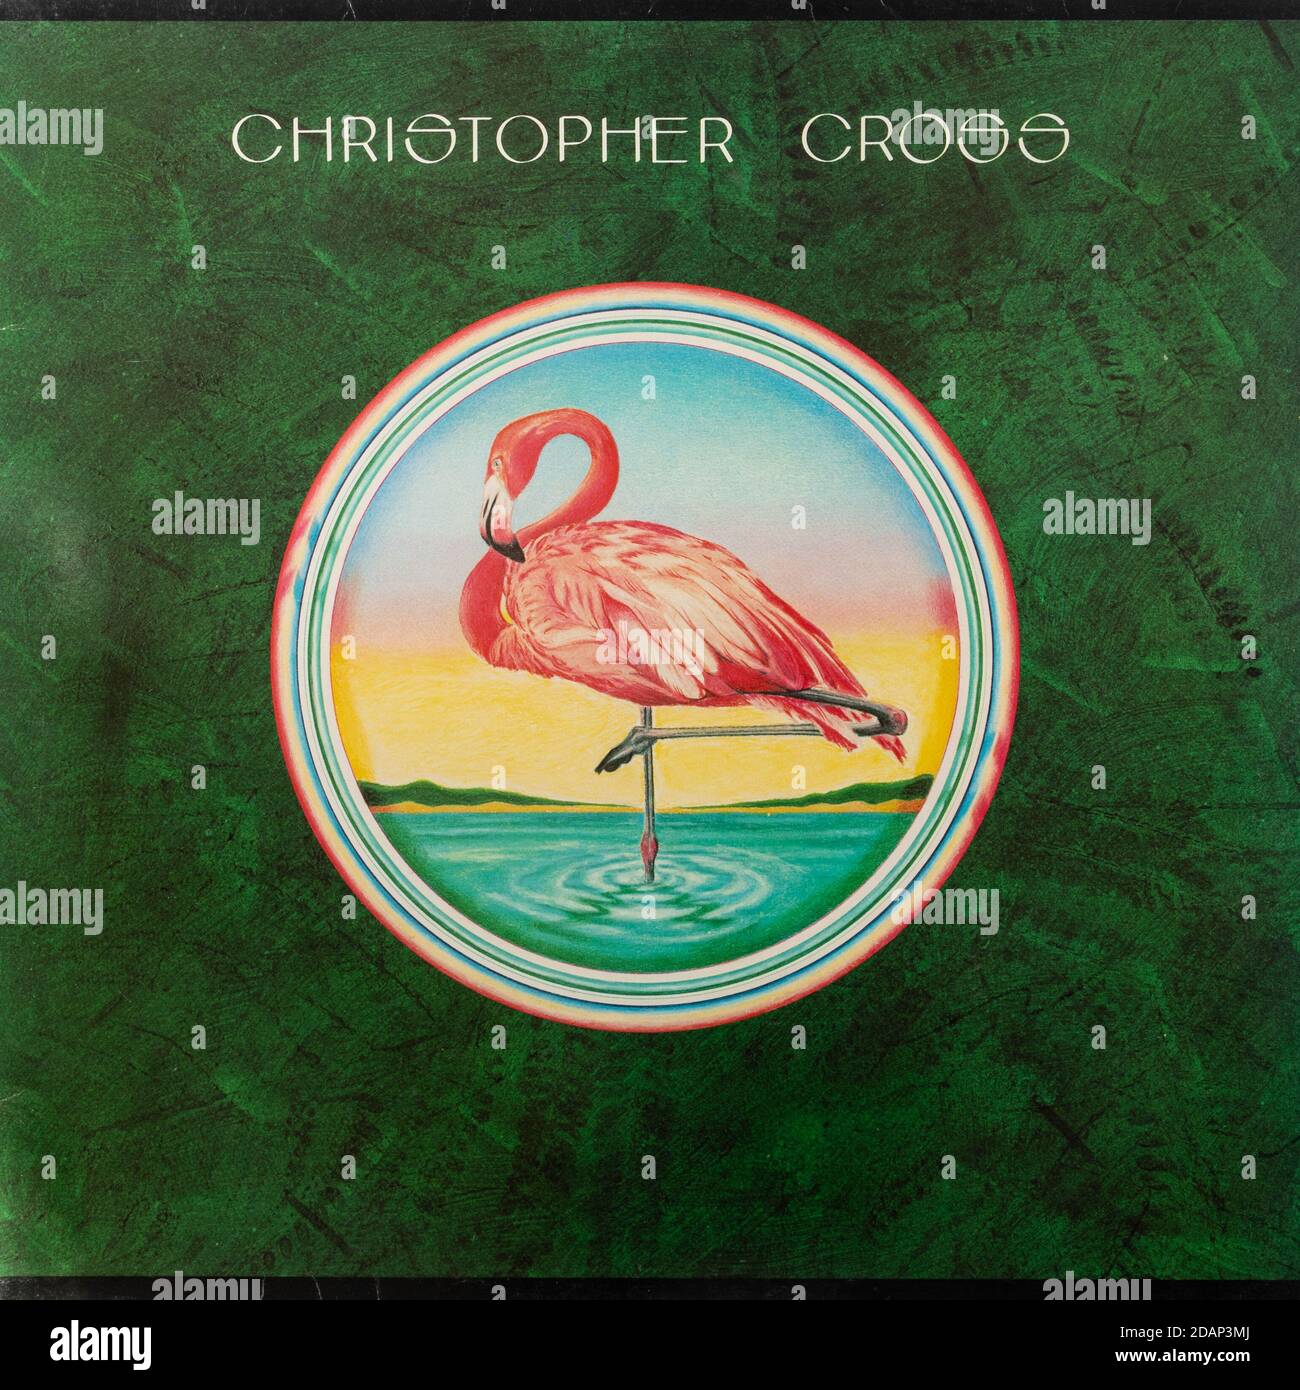 Christopher Cross debut album of the American singer songwriter, vinyl LP record cover Stock Photo